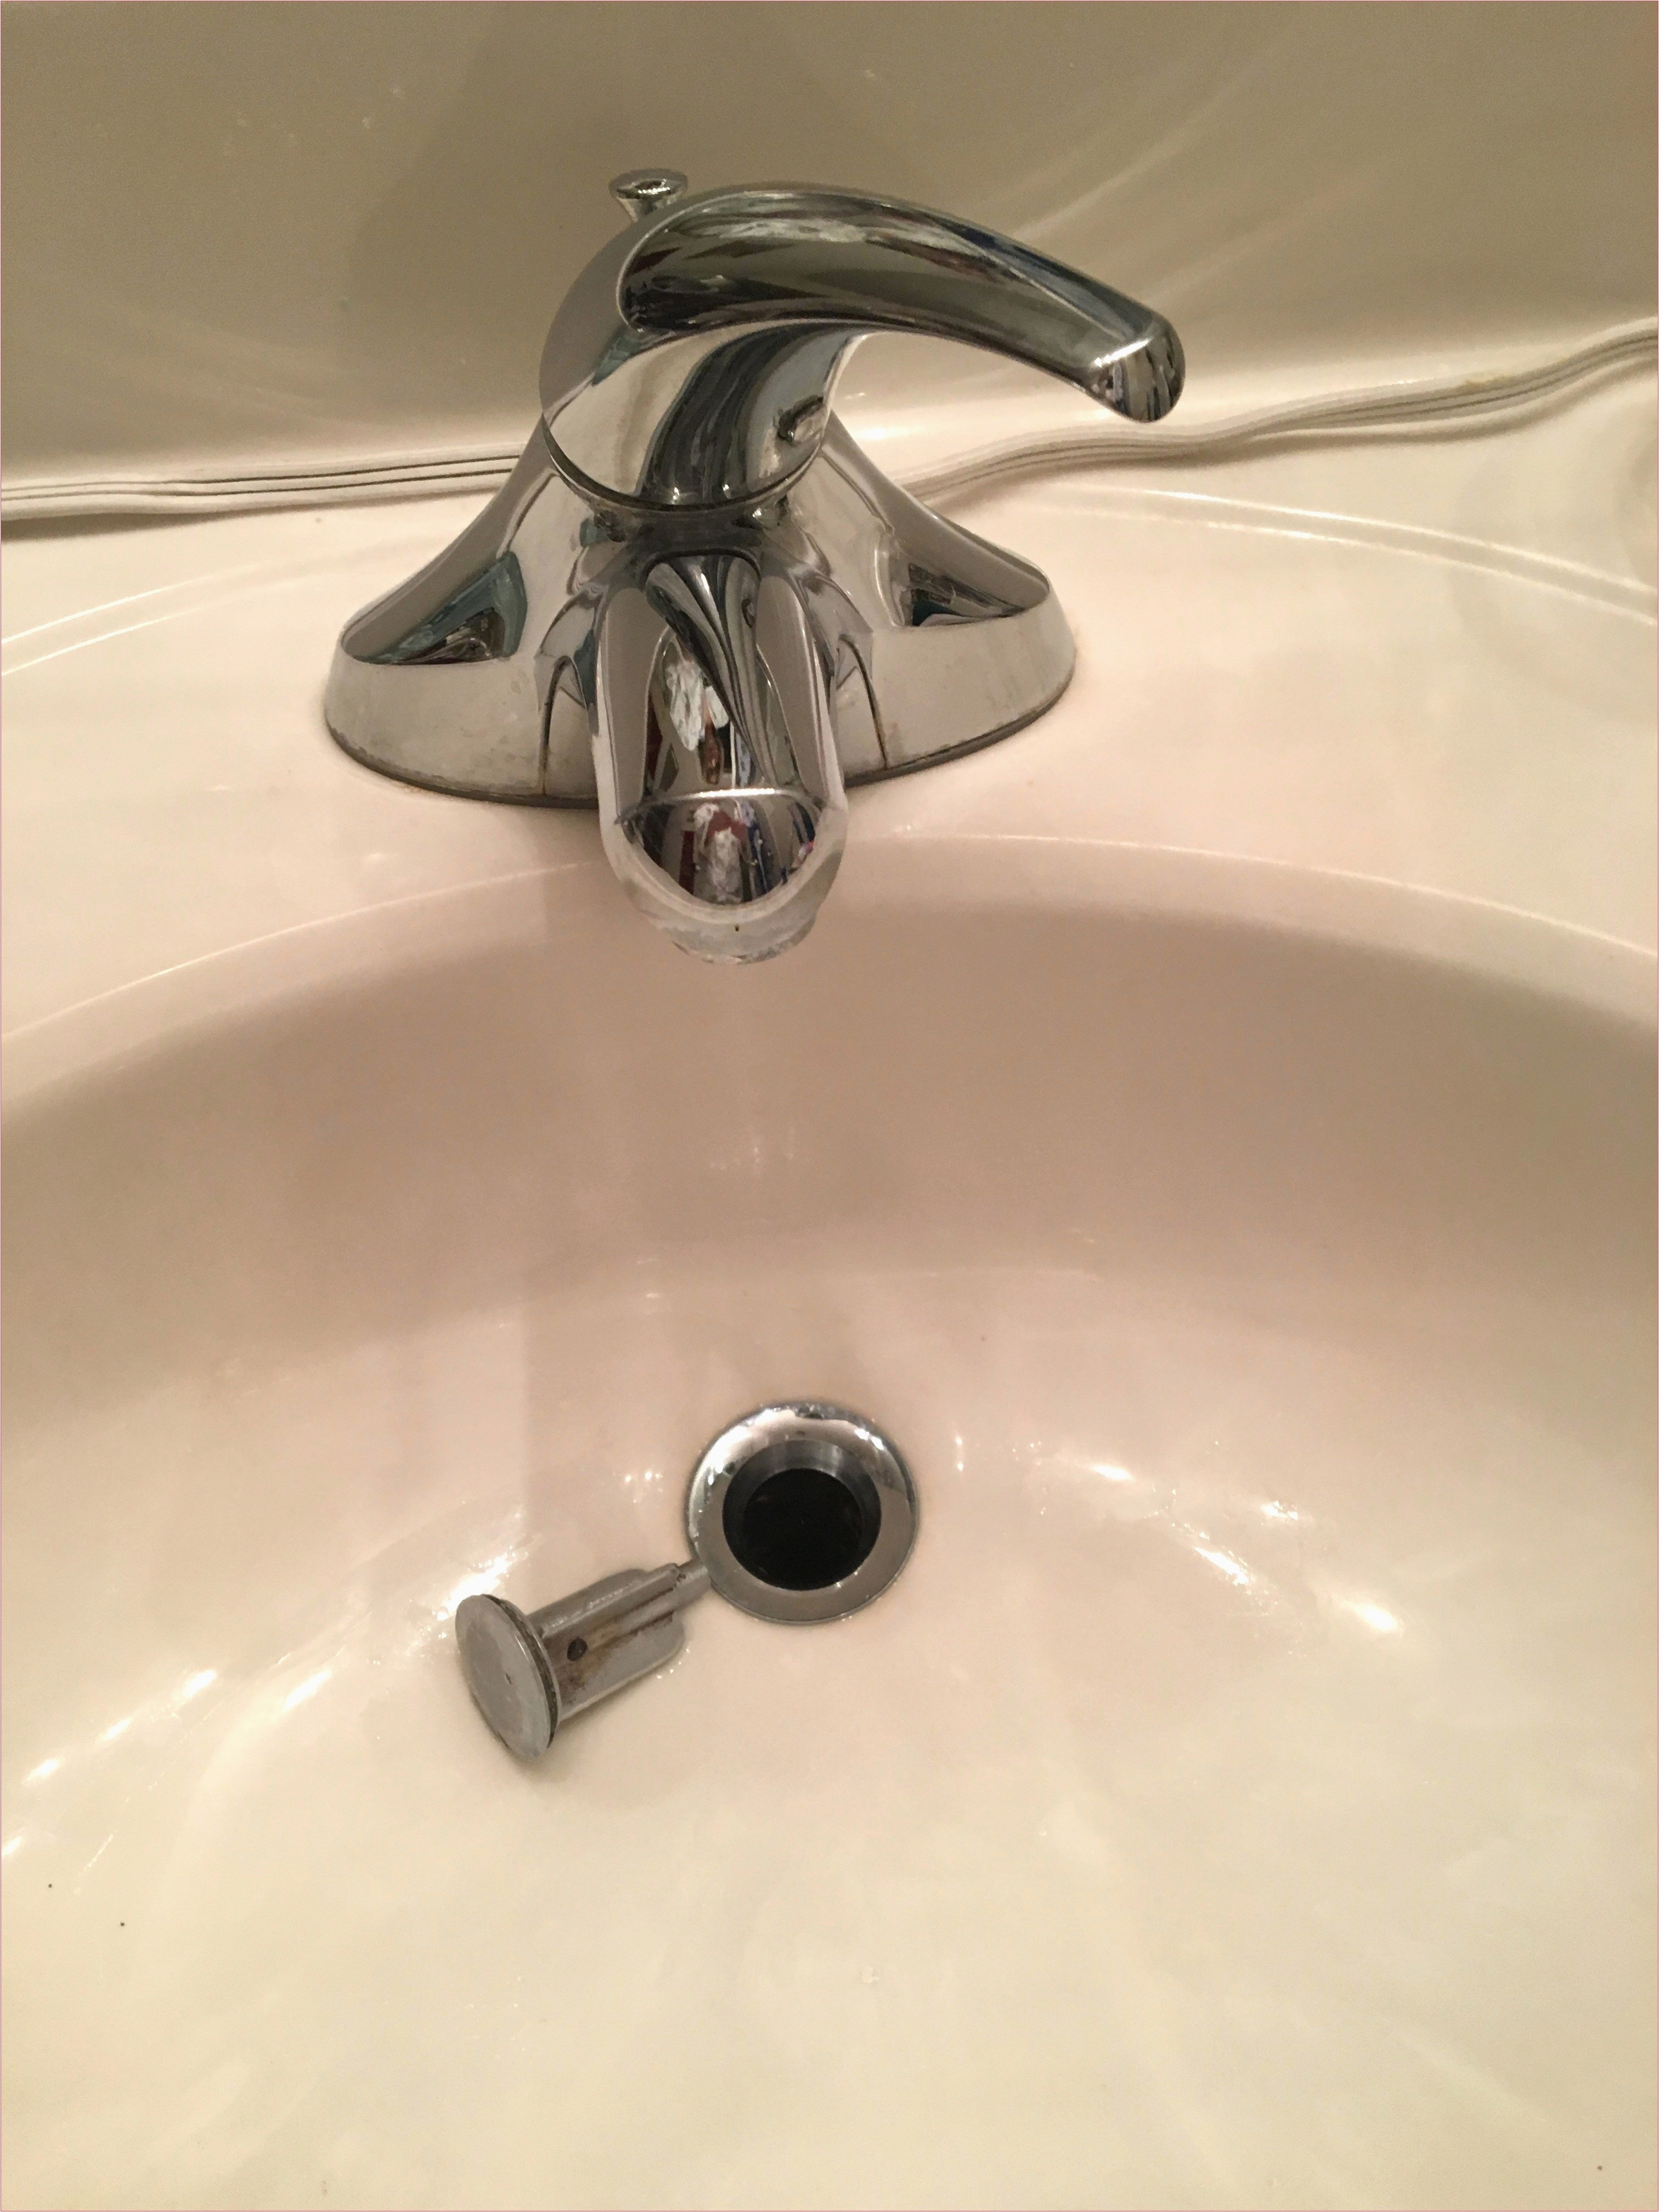 how to unclog a bathtub drain luxury kitchen sink backing up into bathtub awesome unclog bathtub